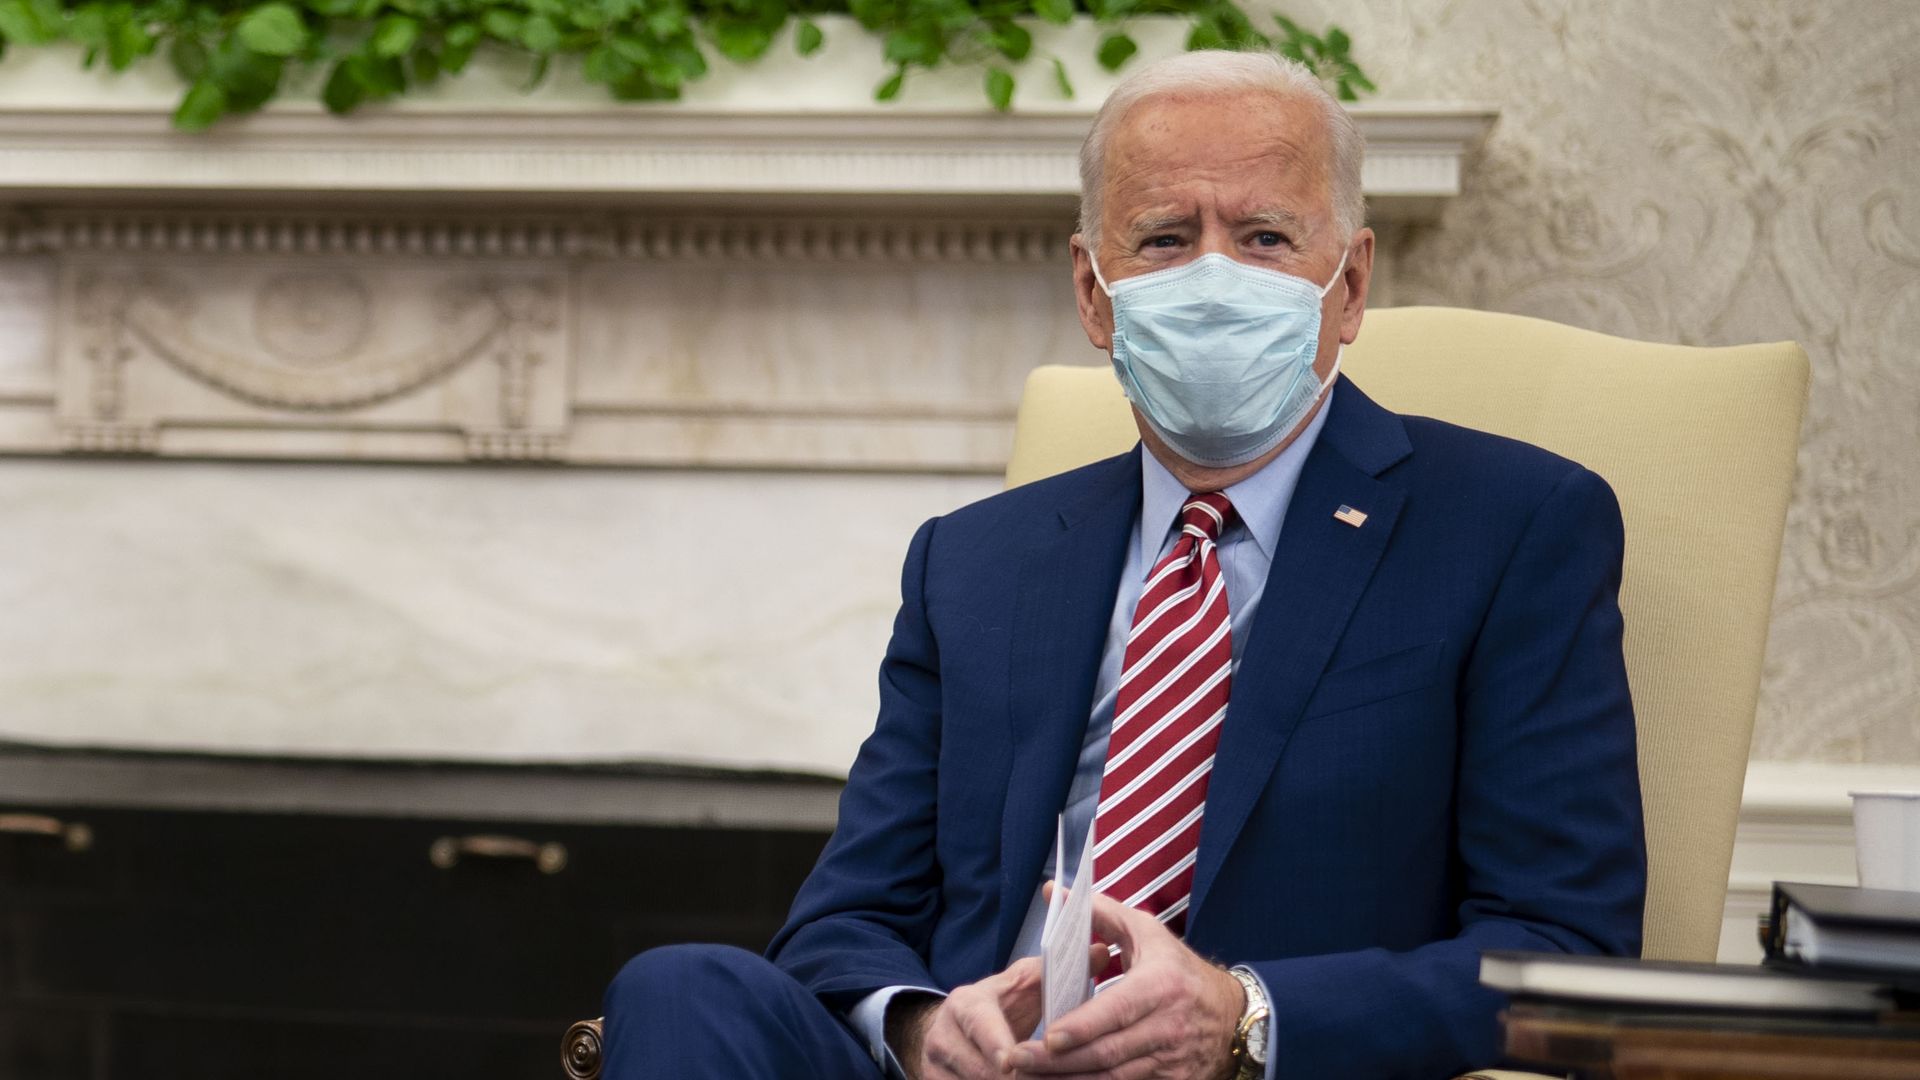 President Joe Biden sitting on a chair wearing a mask